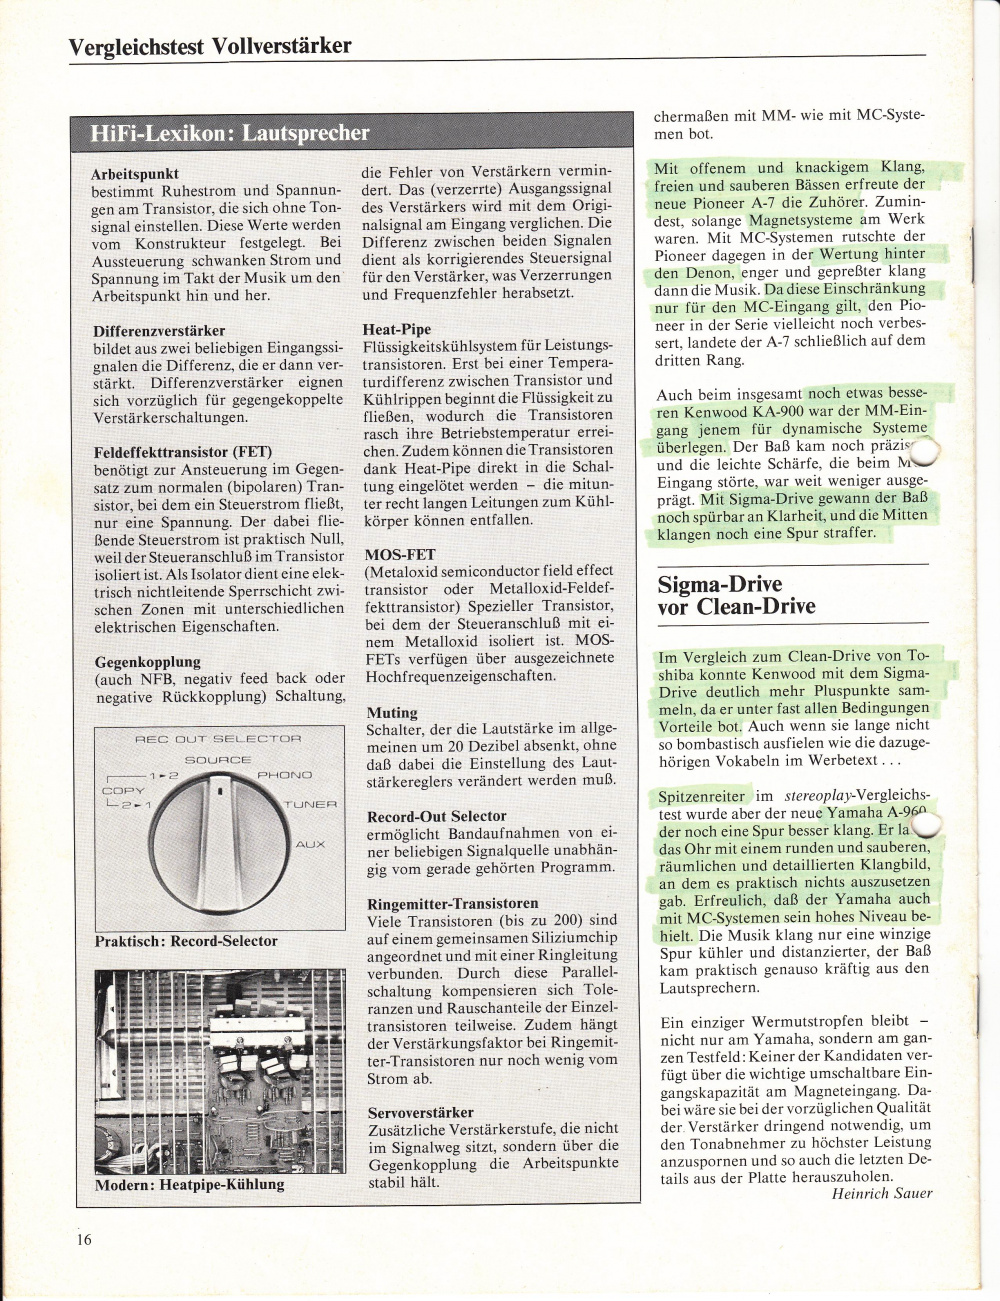 Stereoplay April 1981 9 Verstärker im Vergleich 16.jpg